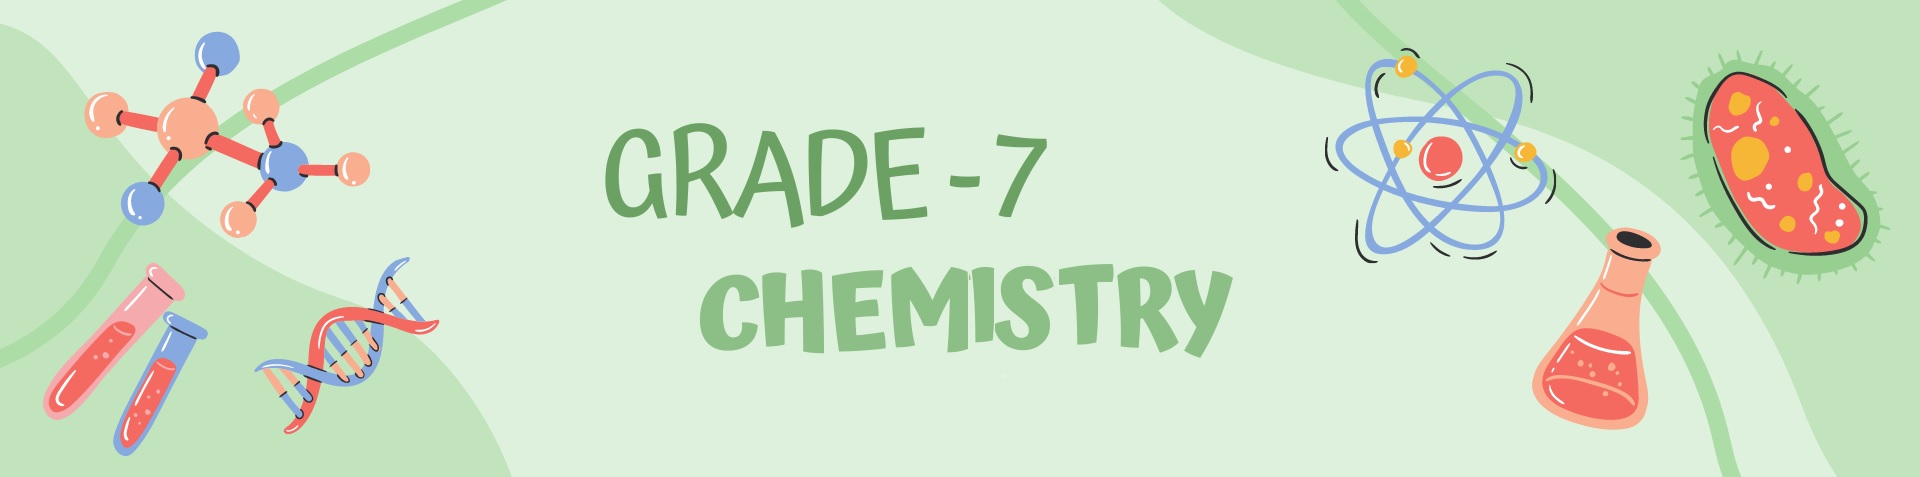 Grade 7 Chemistry